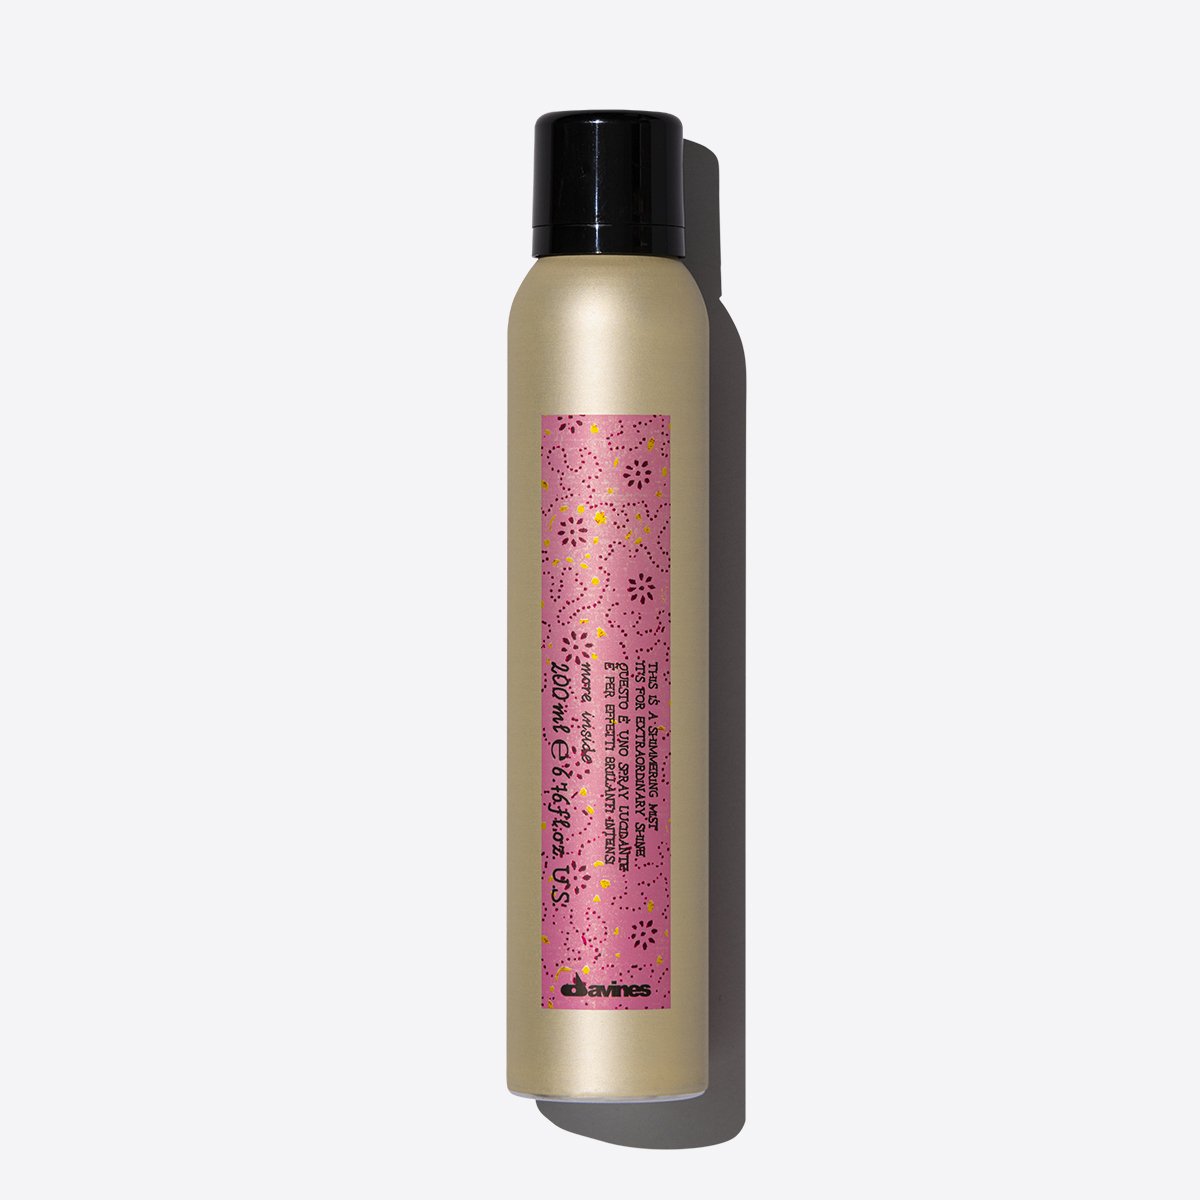 Spray/ laca pelo color Oro - 125 ML — DonDino juguetes